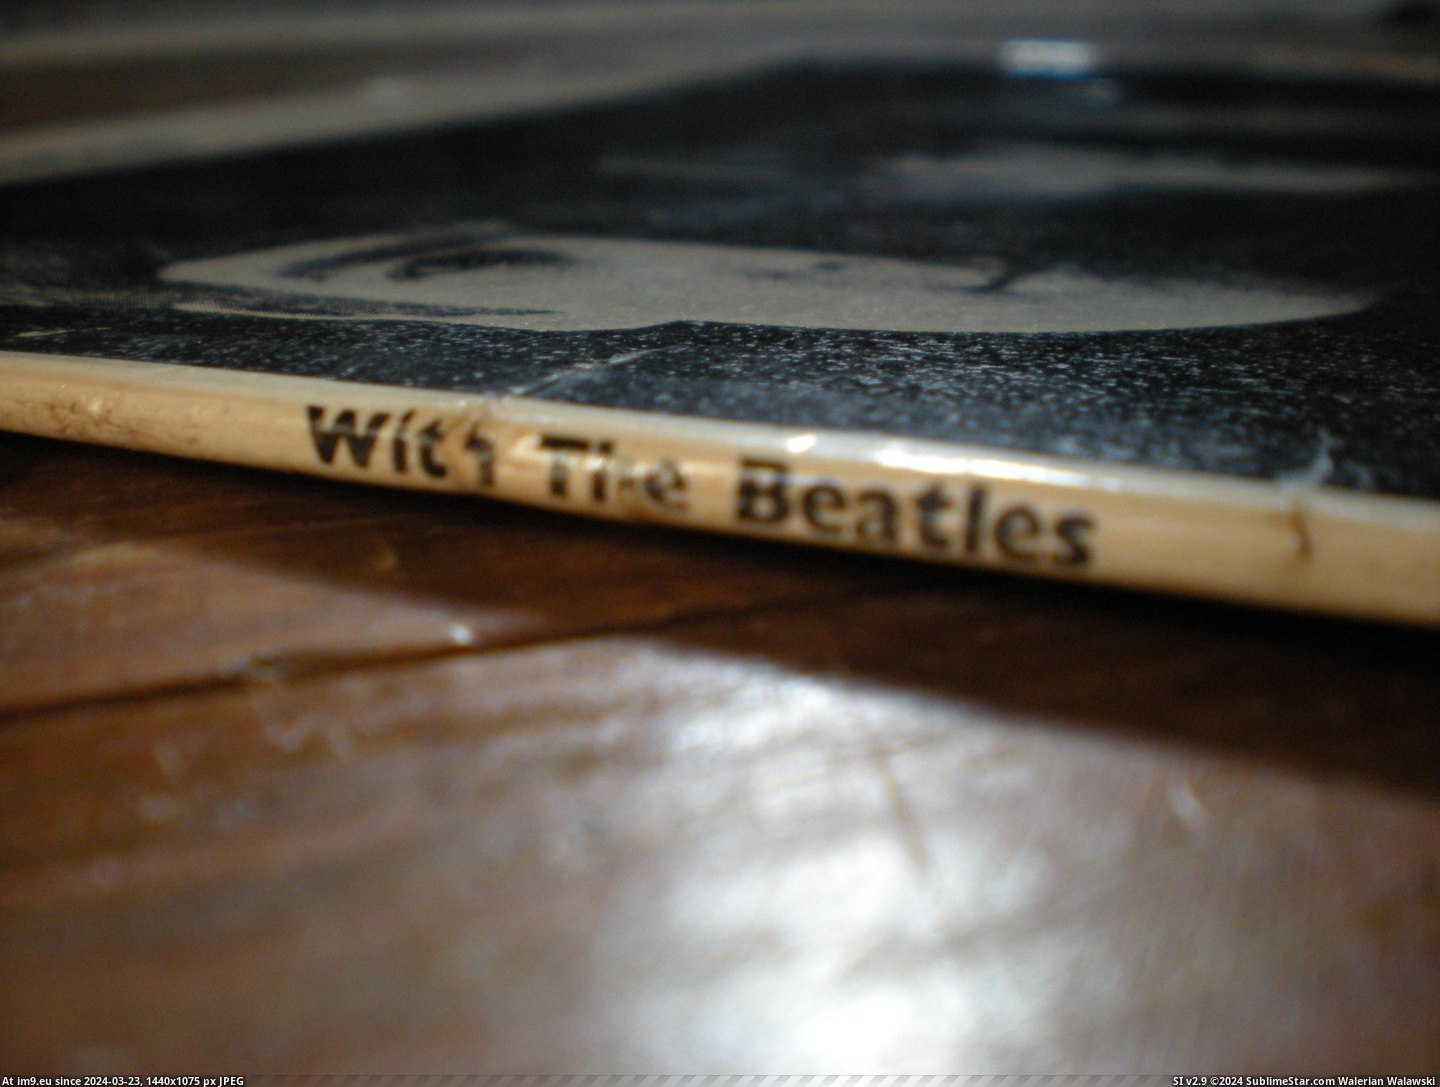  #Beatles  With The Beatles 7N 7 Pic. (Bild von album new 1))